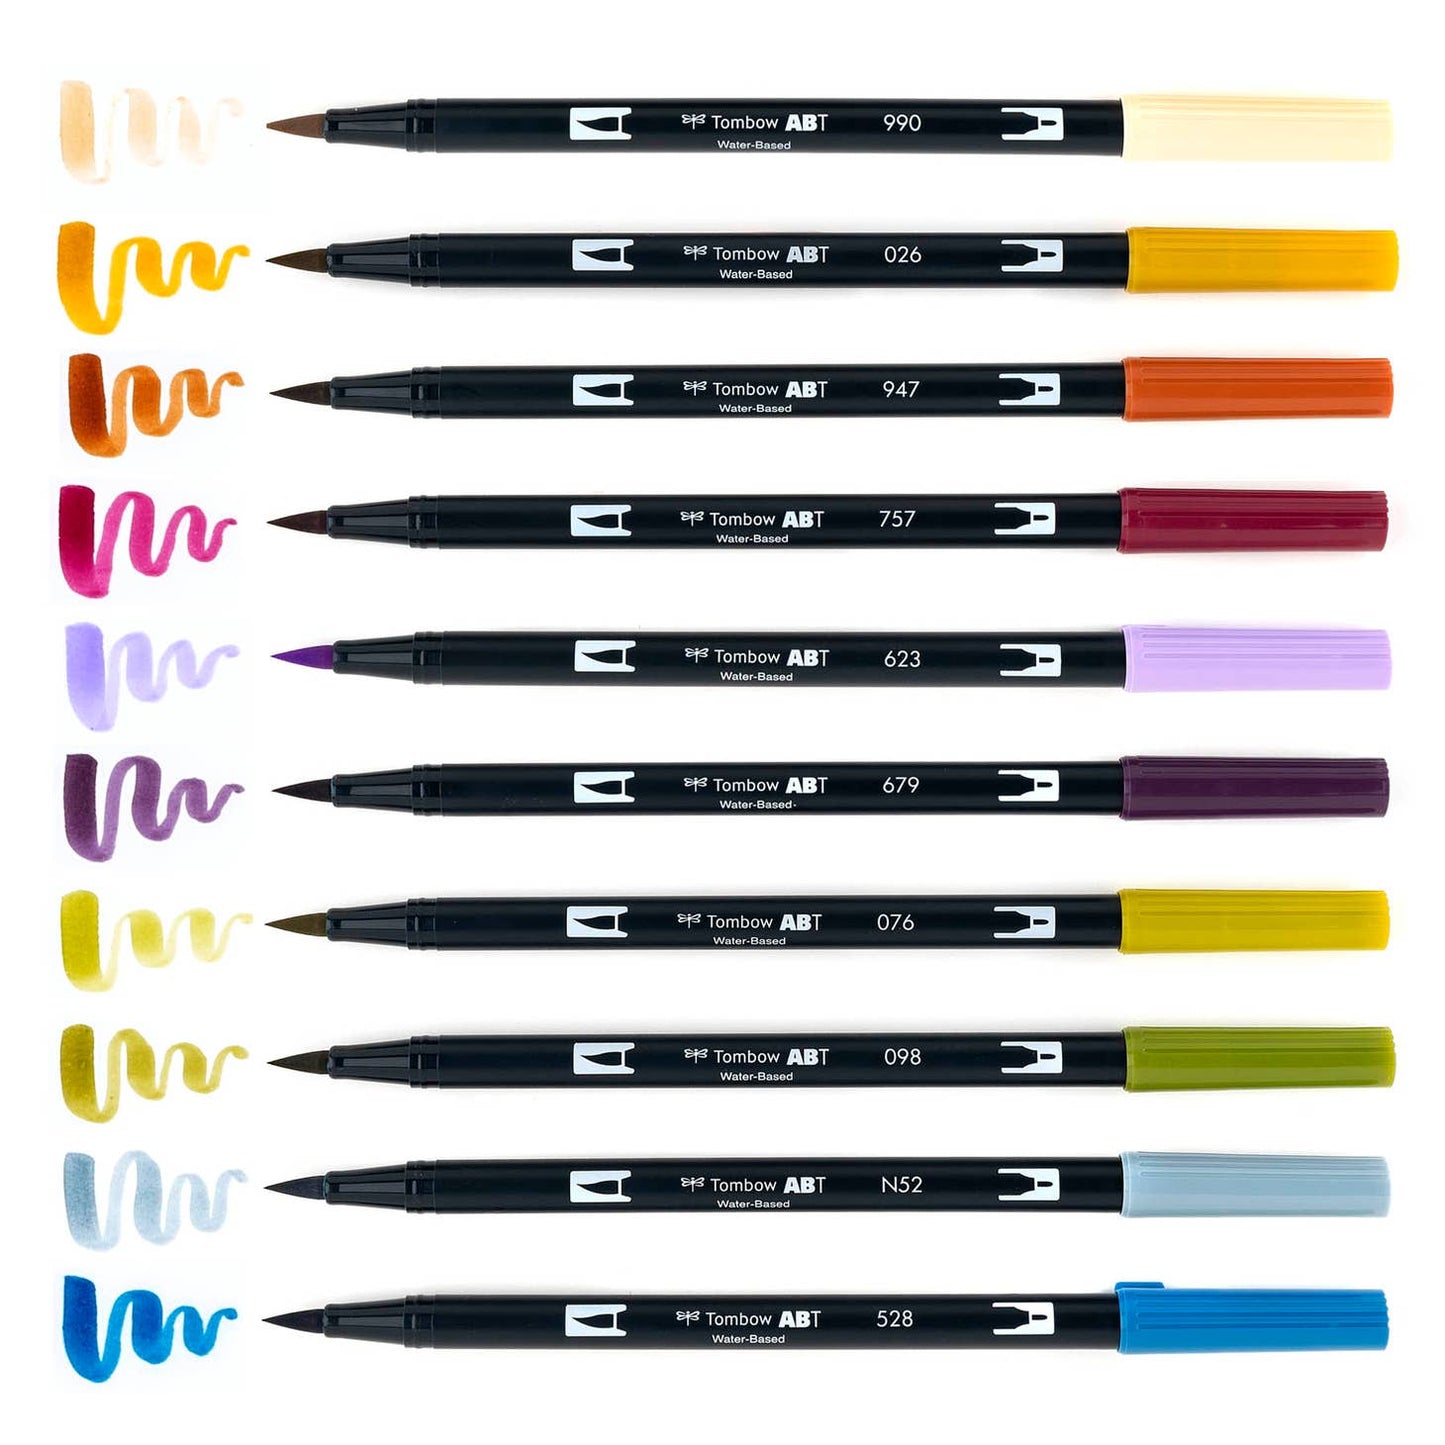 Muted Dual Brush Pen | 10pc Set